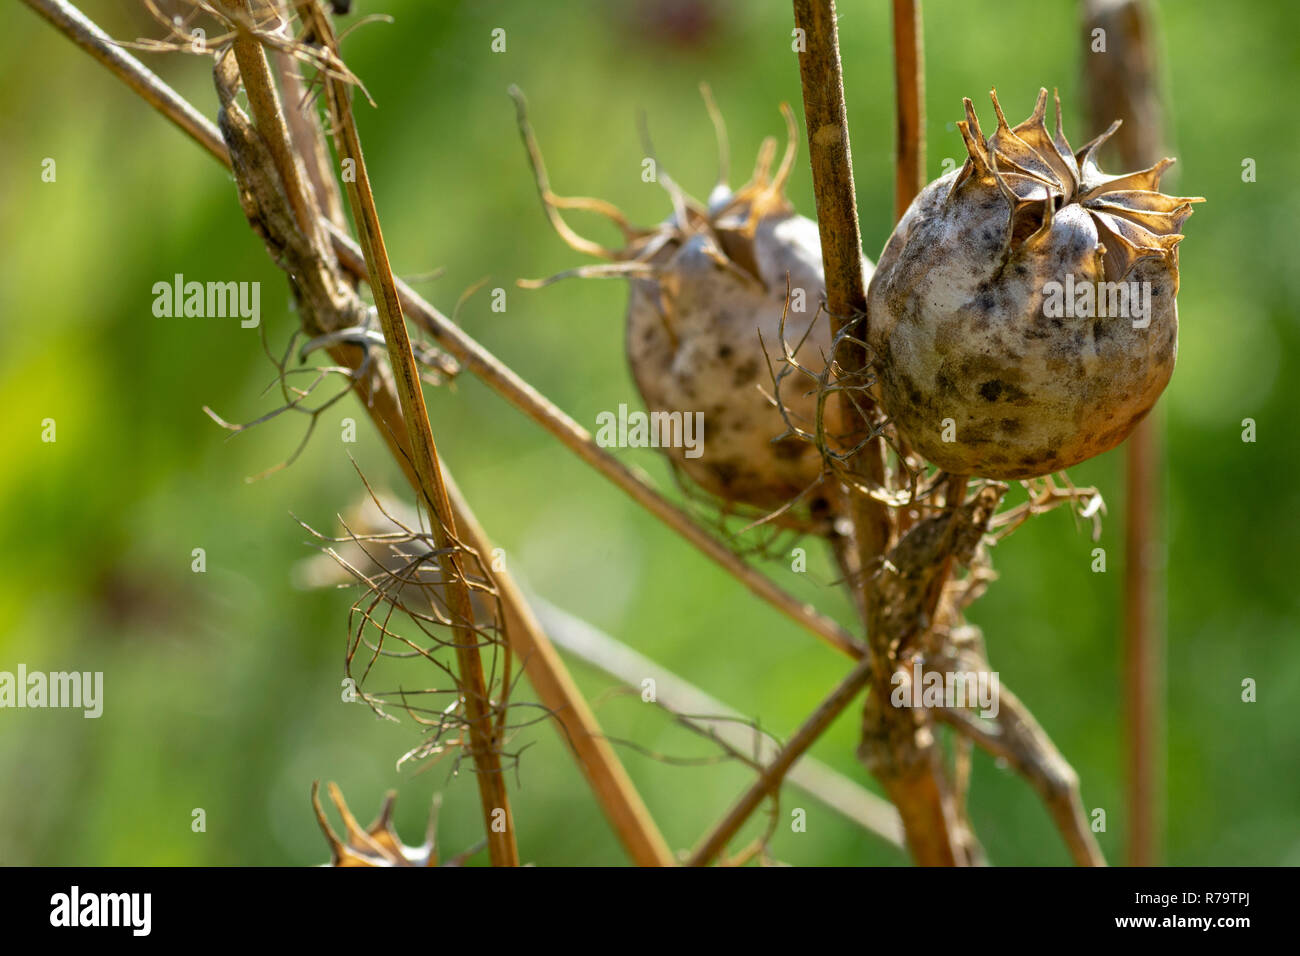 Love-in-the-mist (Nigella damascena) dried seed heads Stock Photo